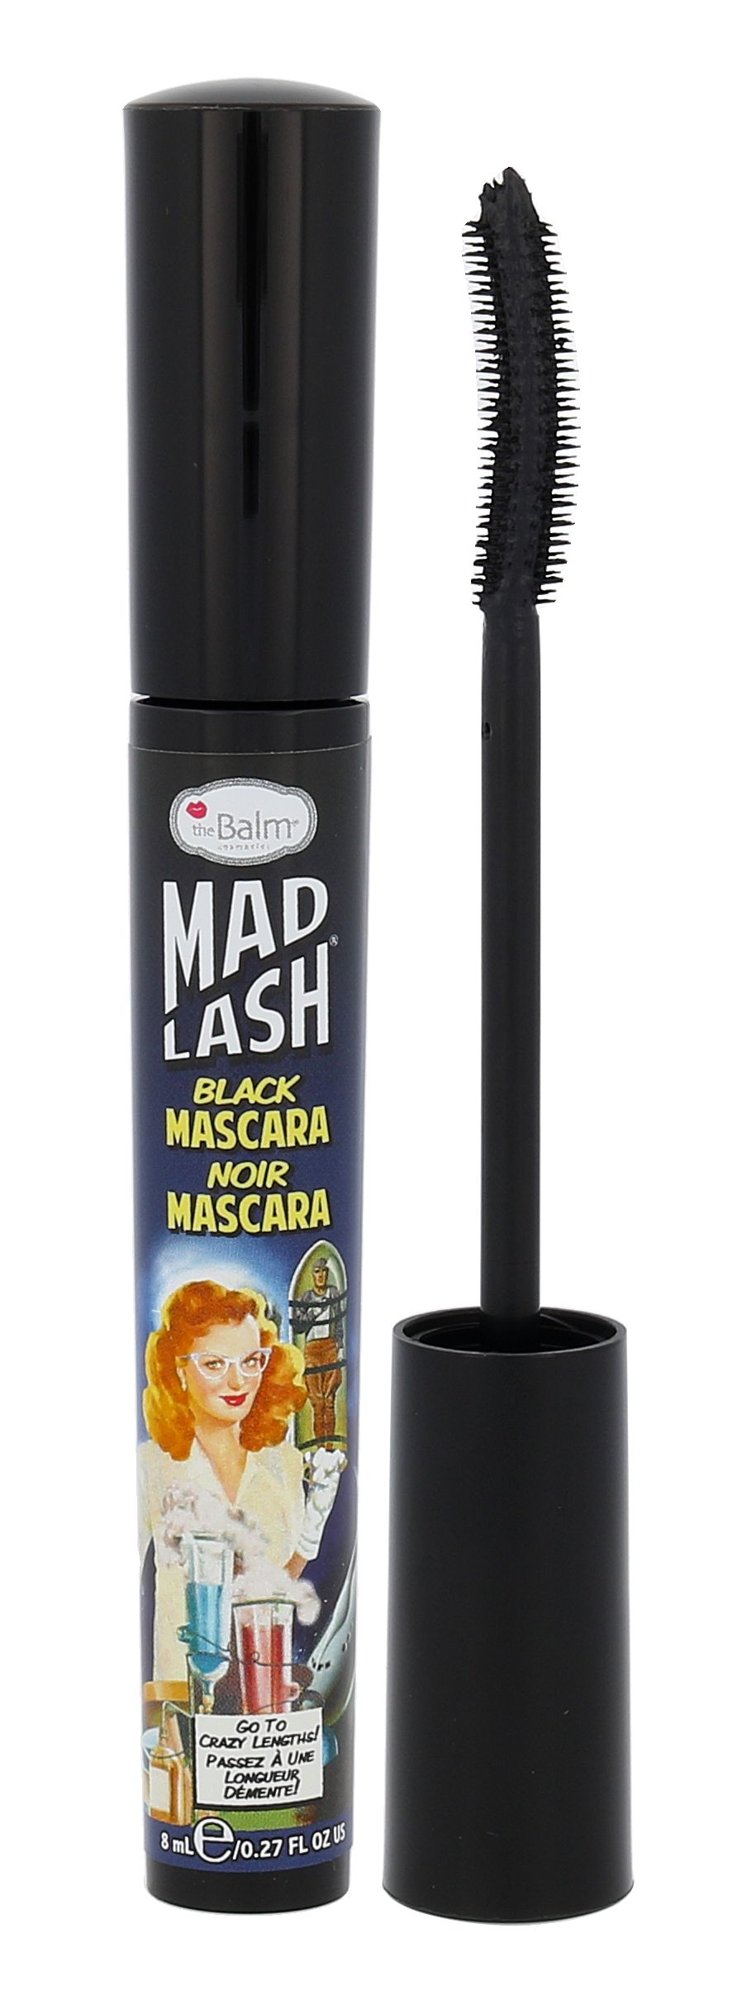 TheBalm Mad Lash Mascara